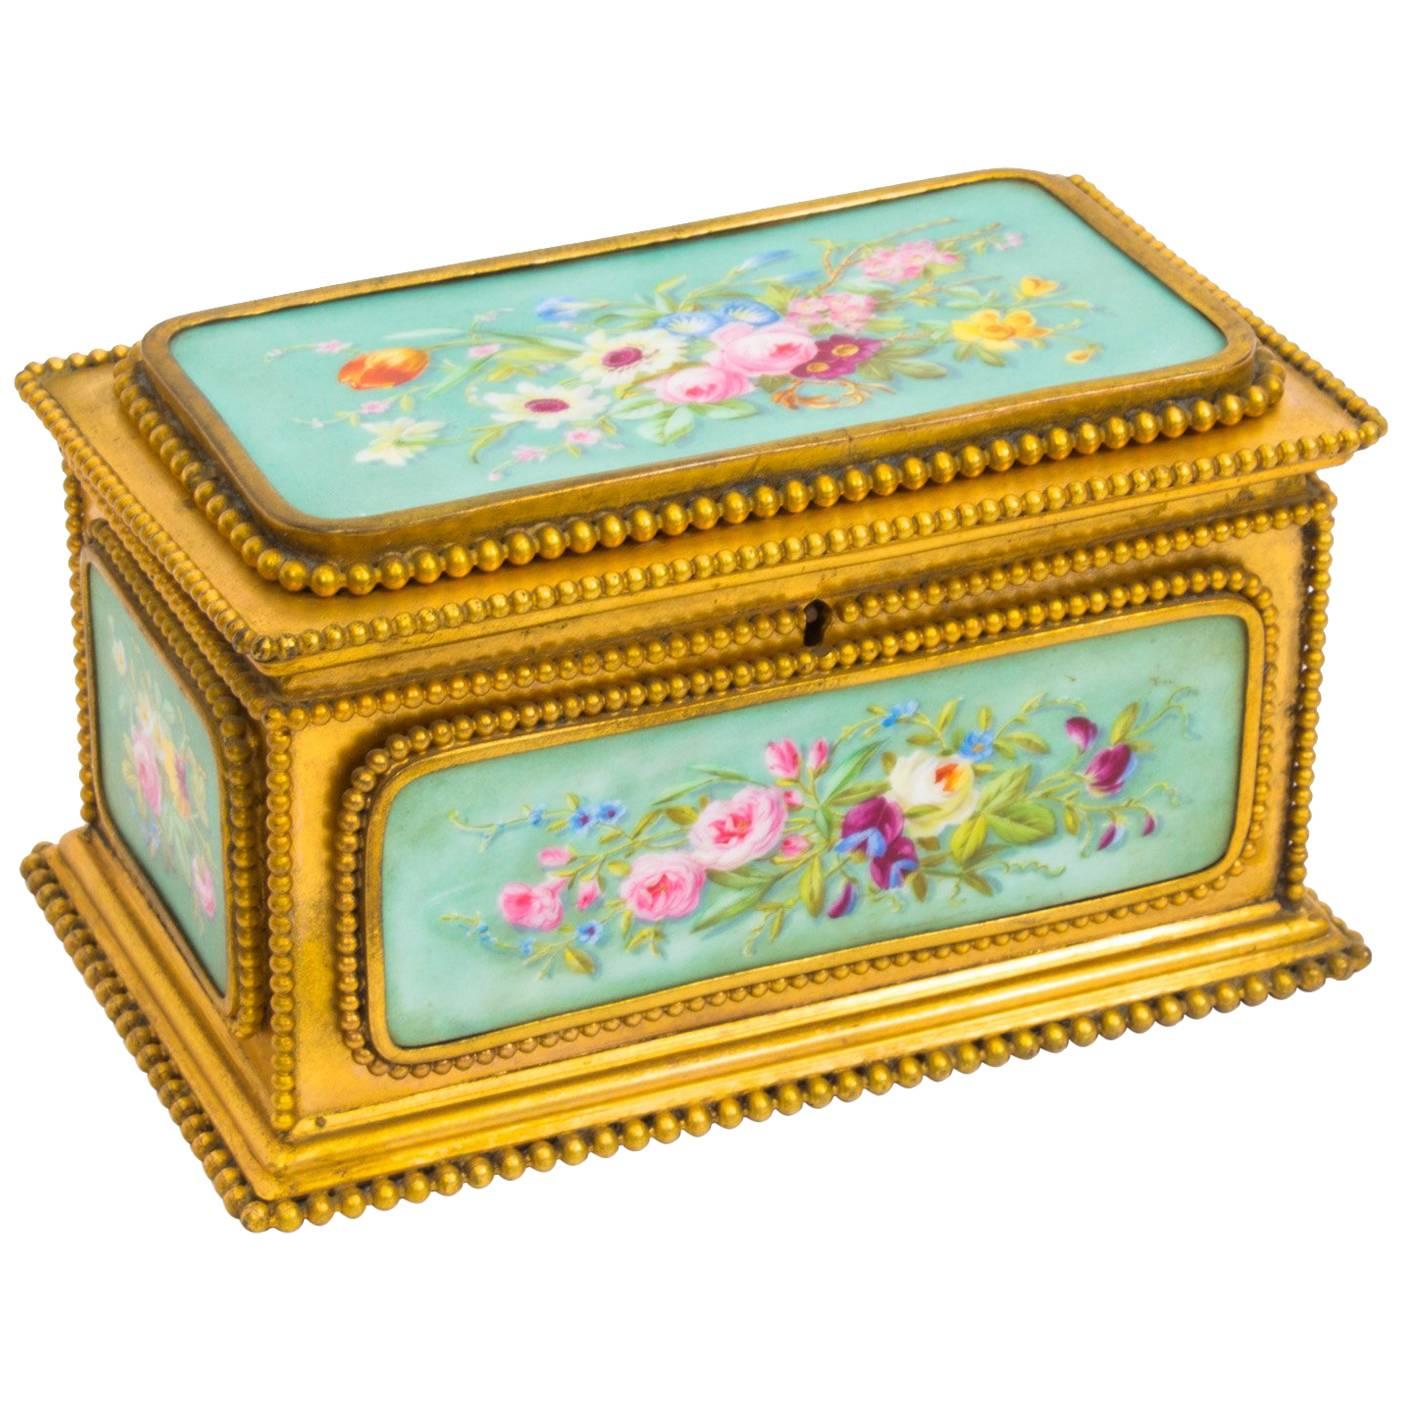 19th Century Porcelain and Ormolu Jewel Casket Box by Tahan